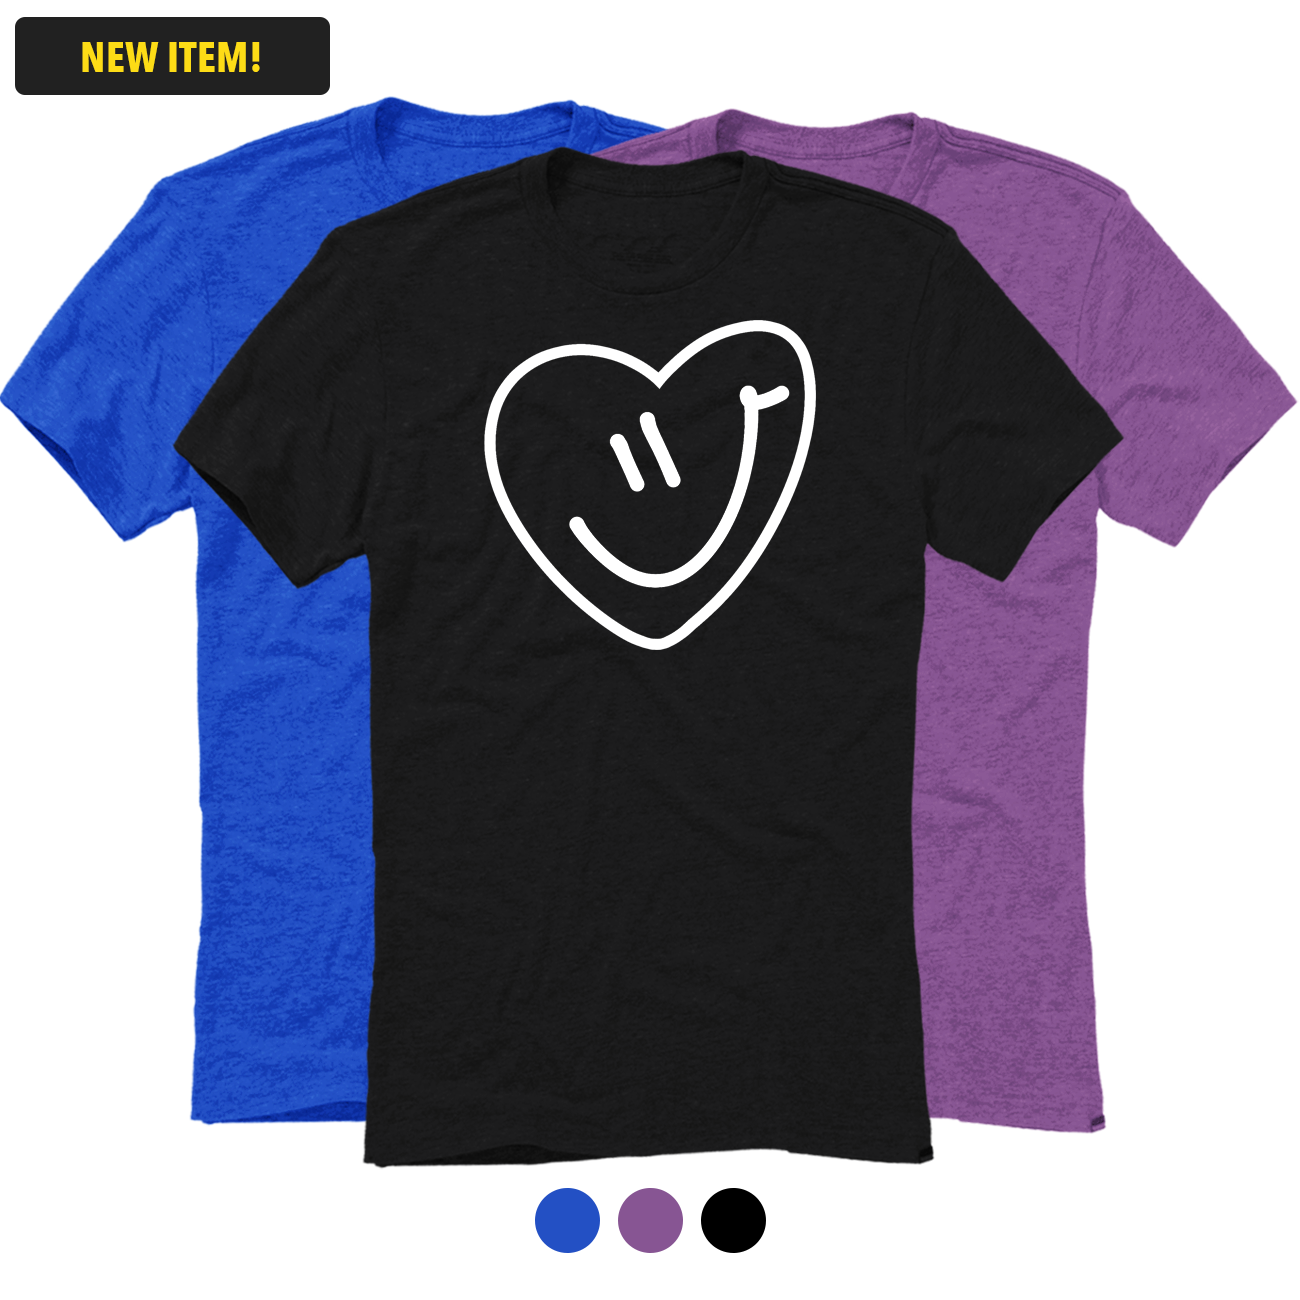 Smiley T-Shirt V2